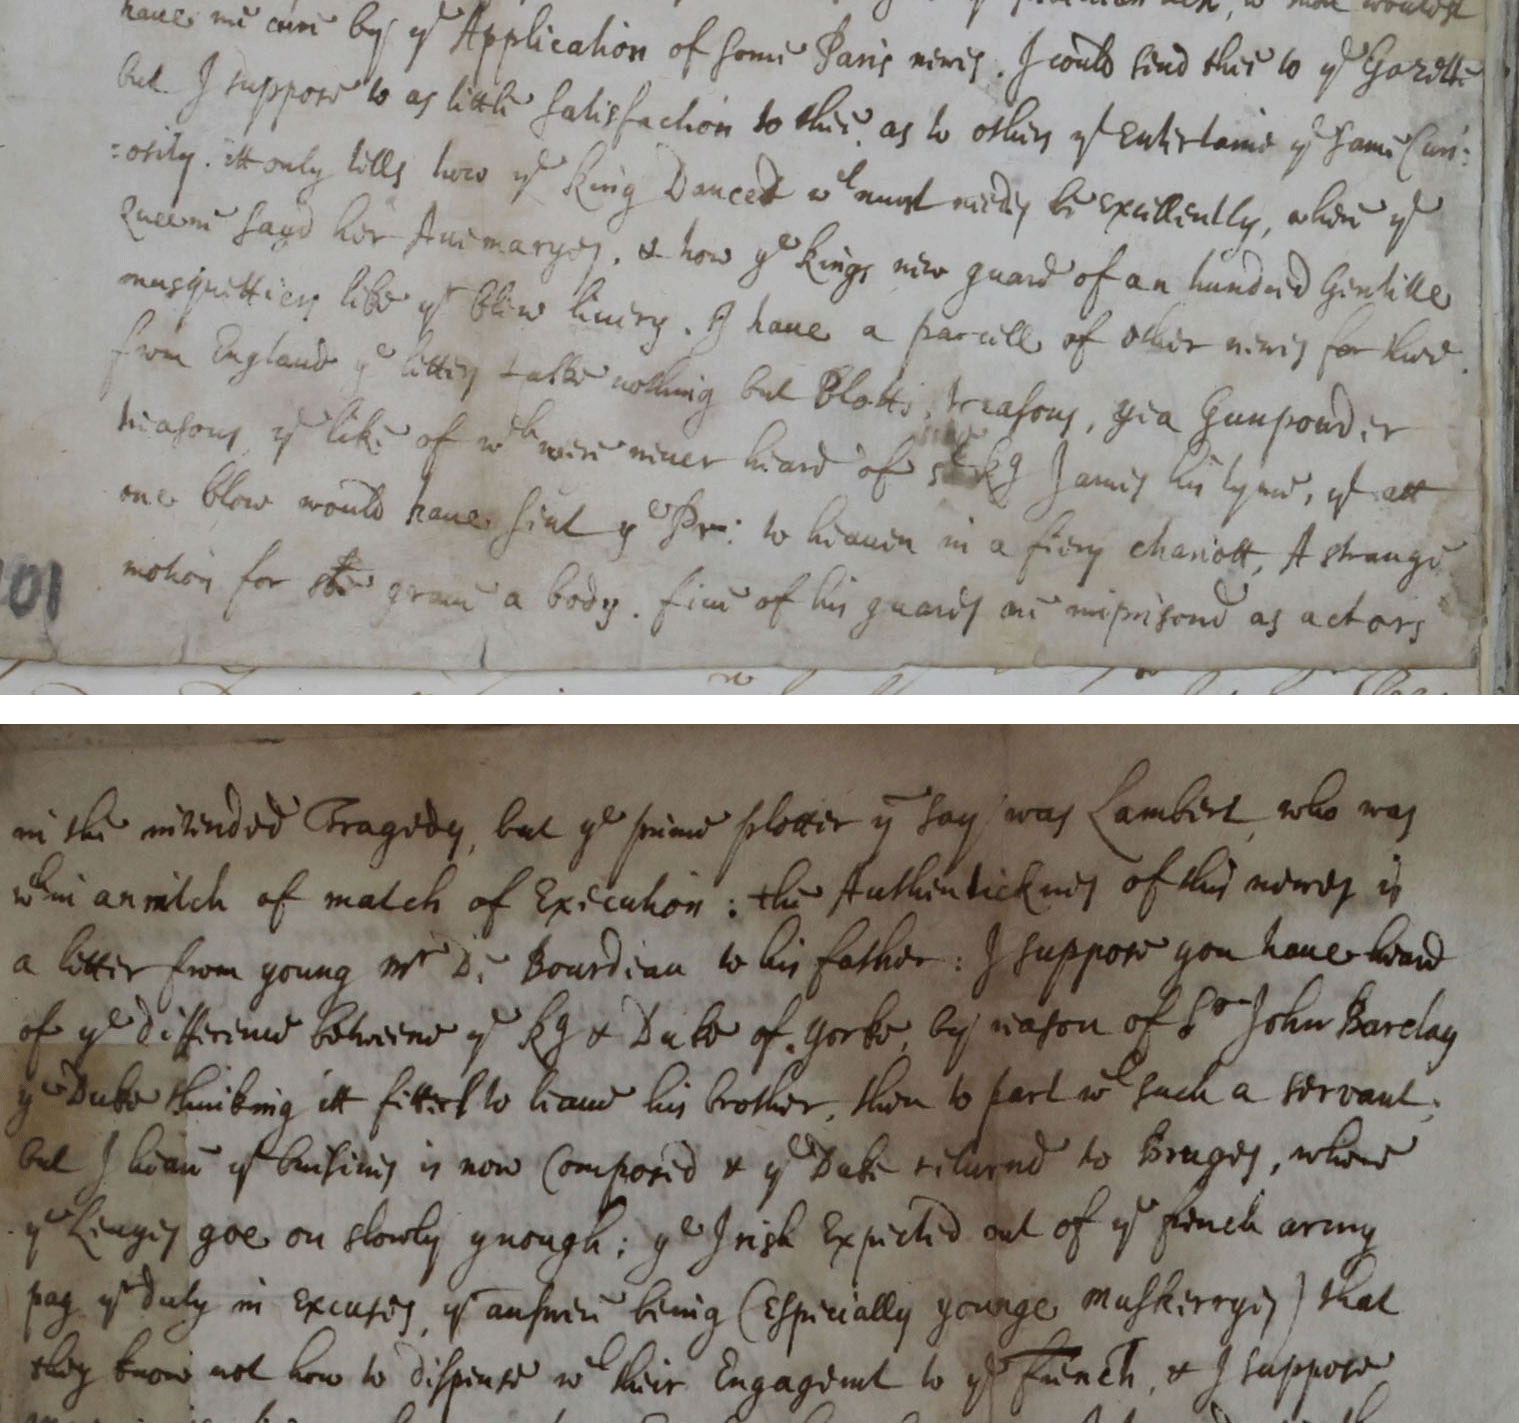 Image of a handwritten letter